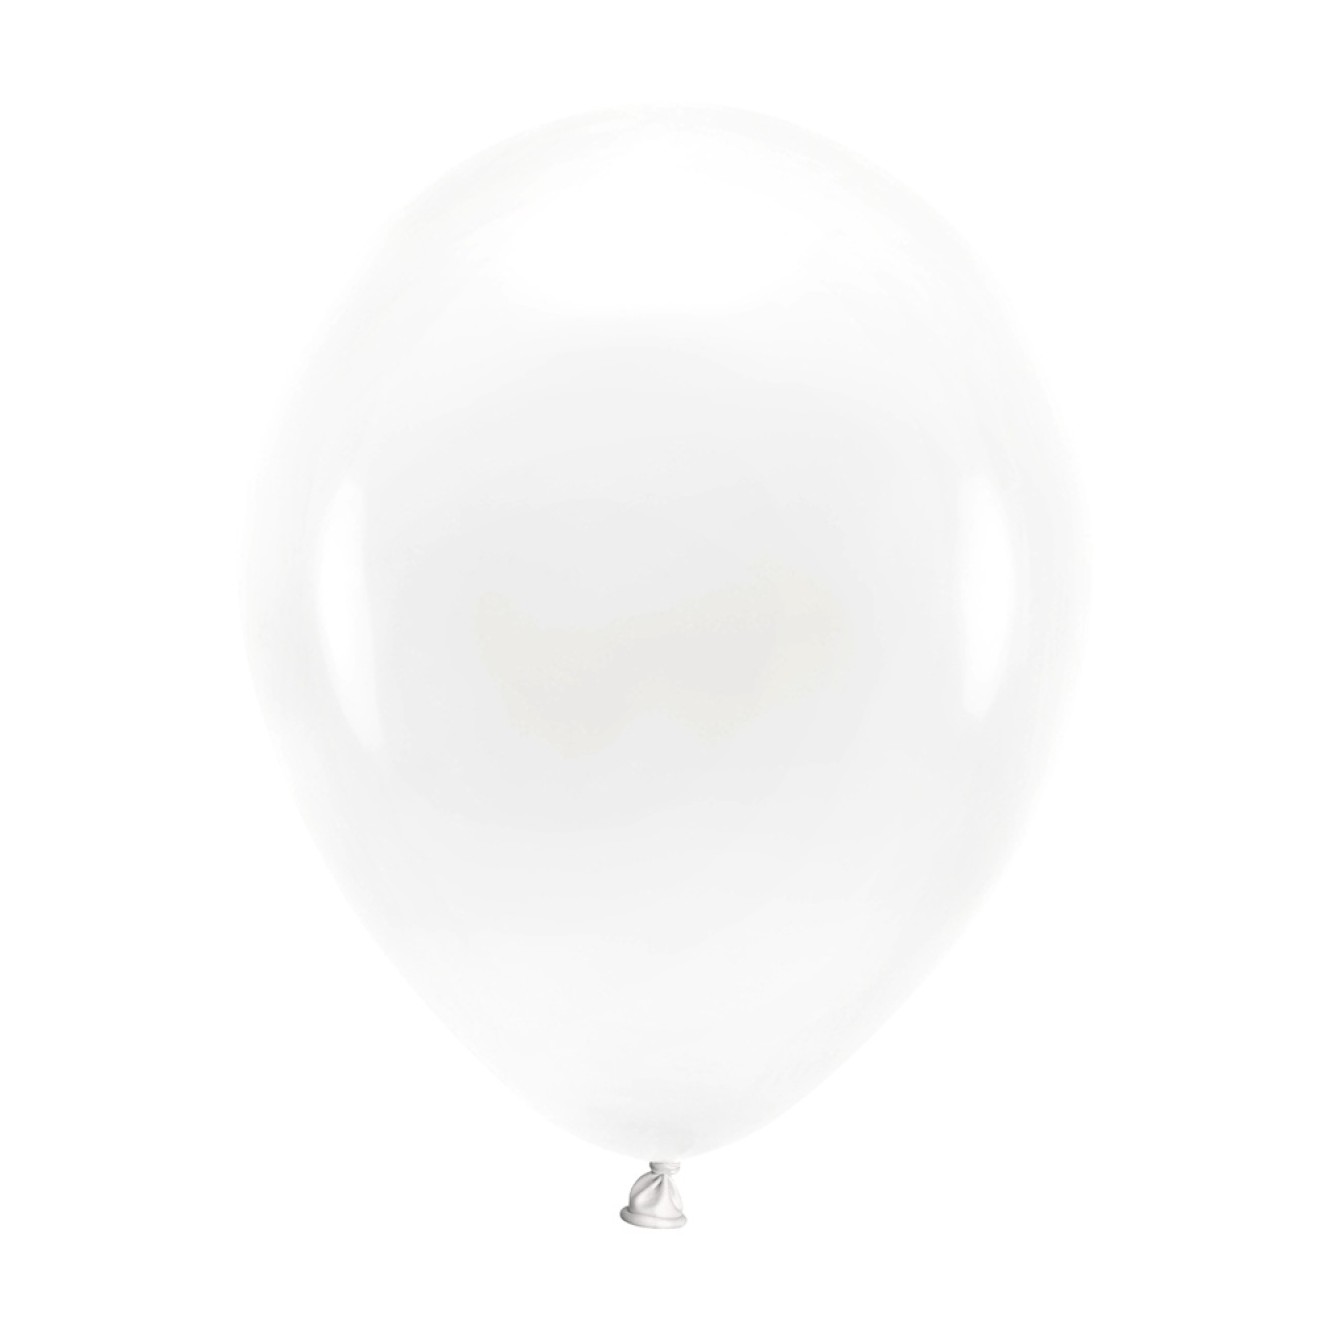 Luftballons Frosty White (Metallic) 13 cm - 100 Stück | luftballon.de